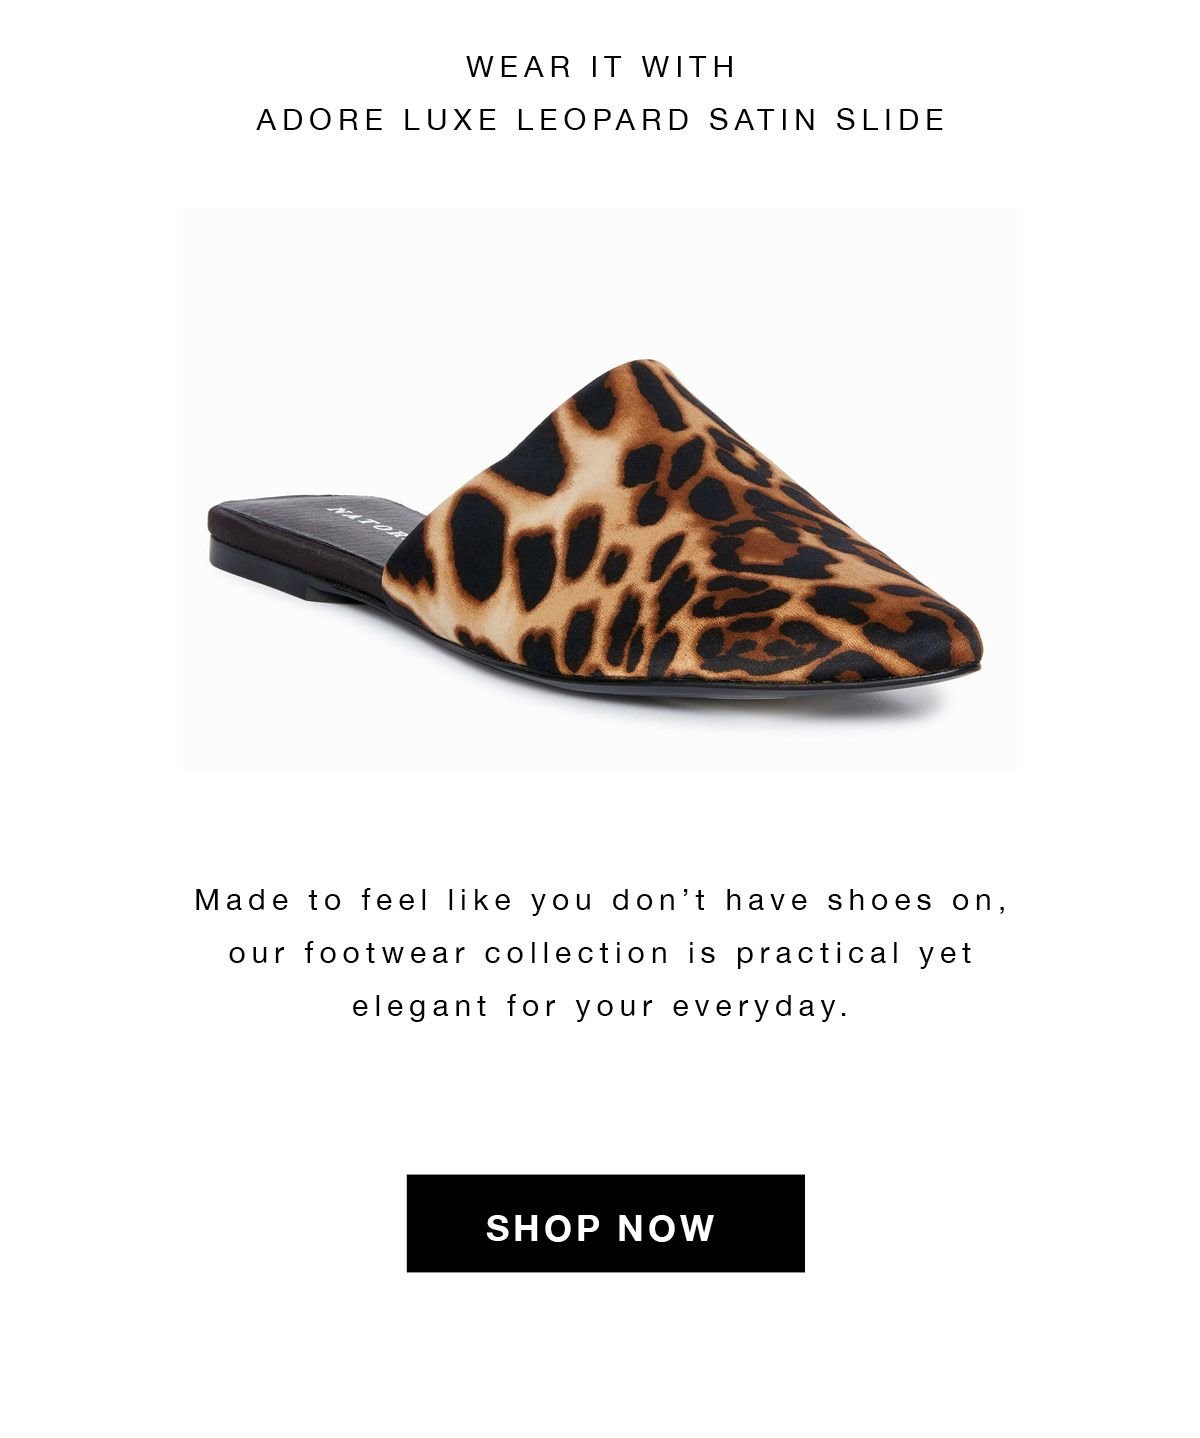 Image of natori adore luxe leopard satin slide